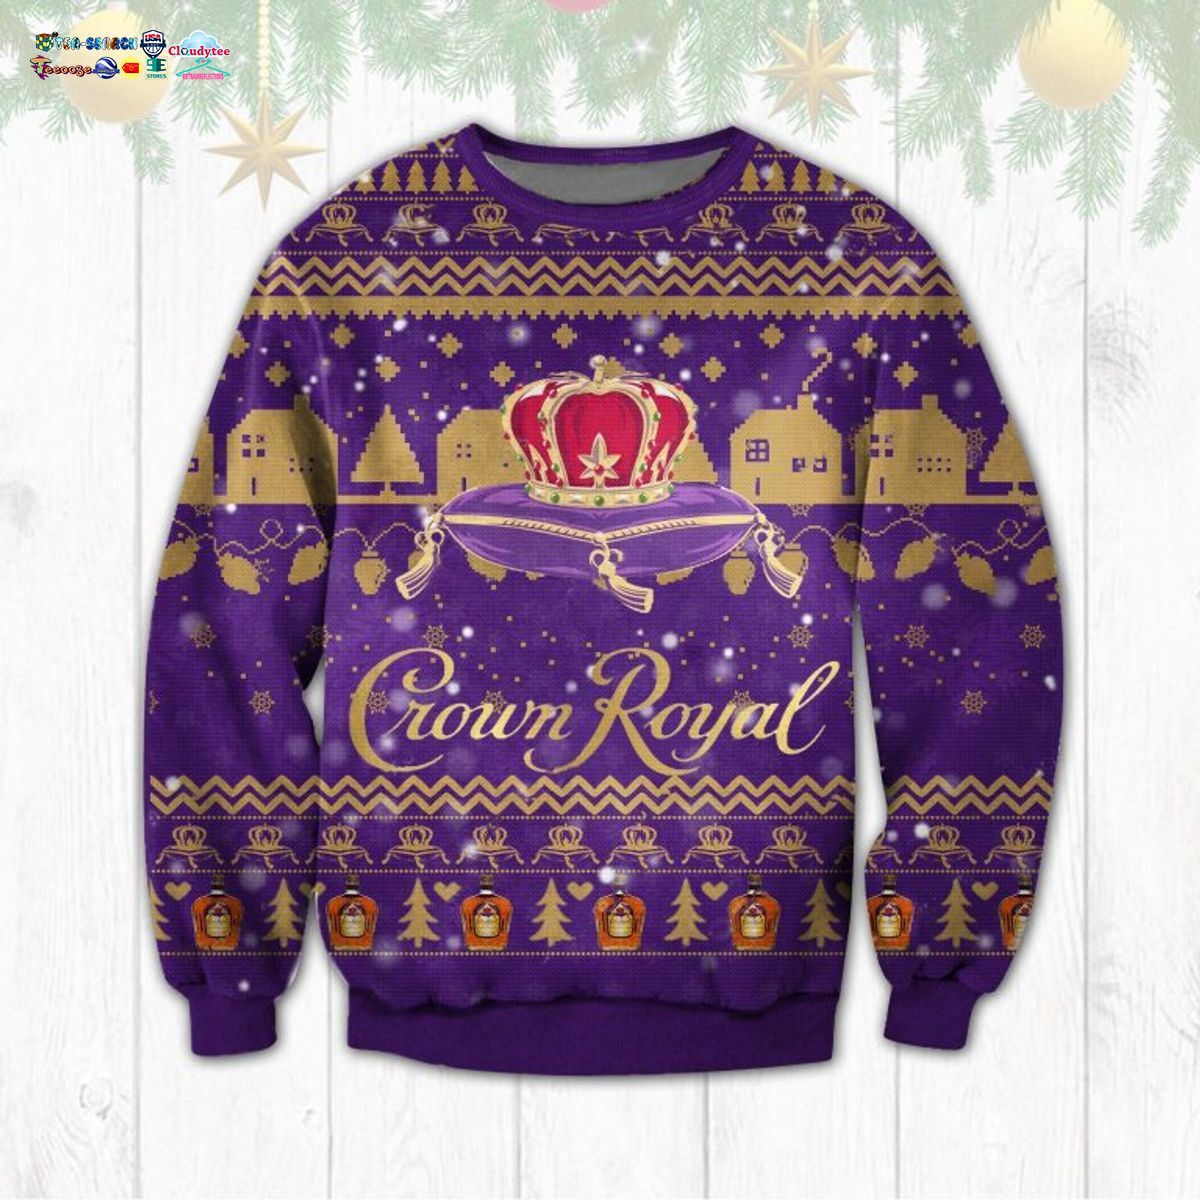 Crown Royal Ver 3 Ugly Christmas Sweater - Nice elegant click